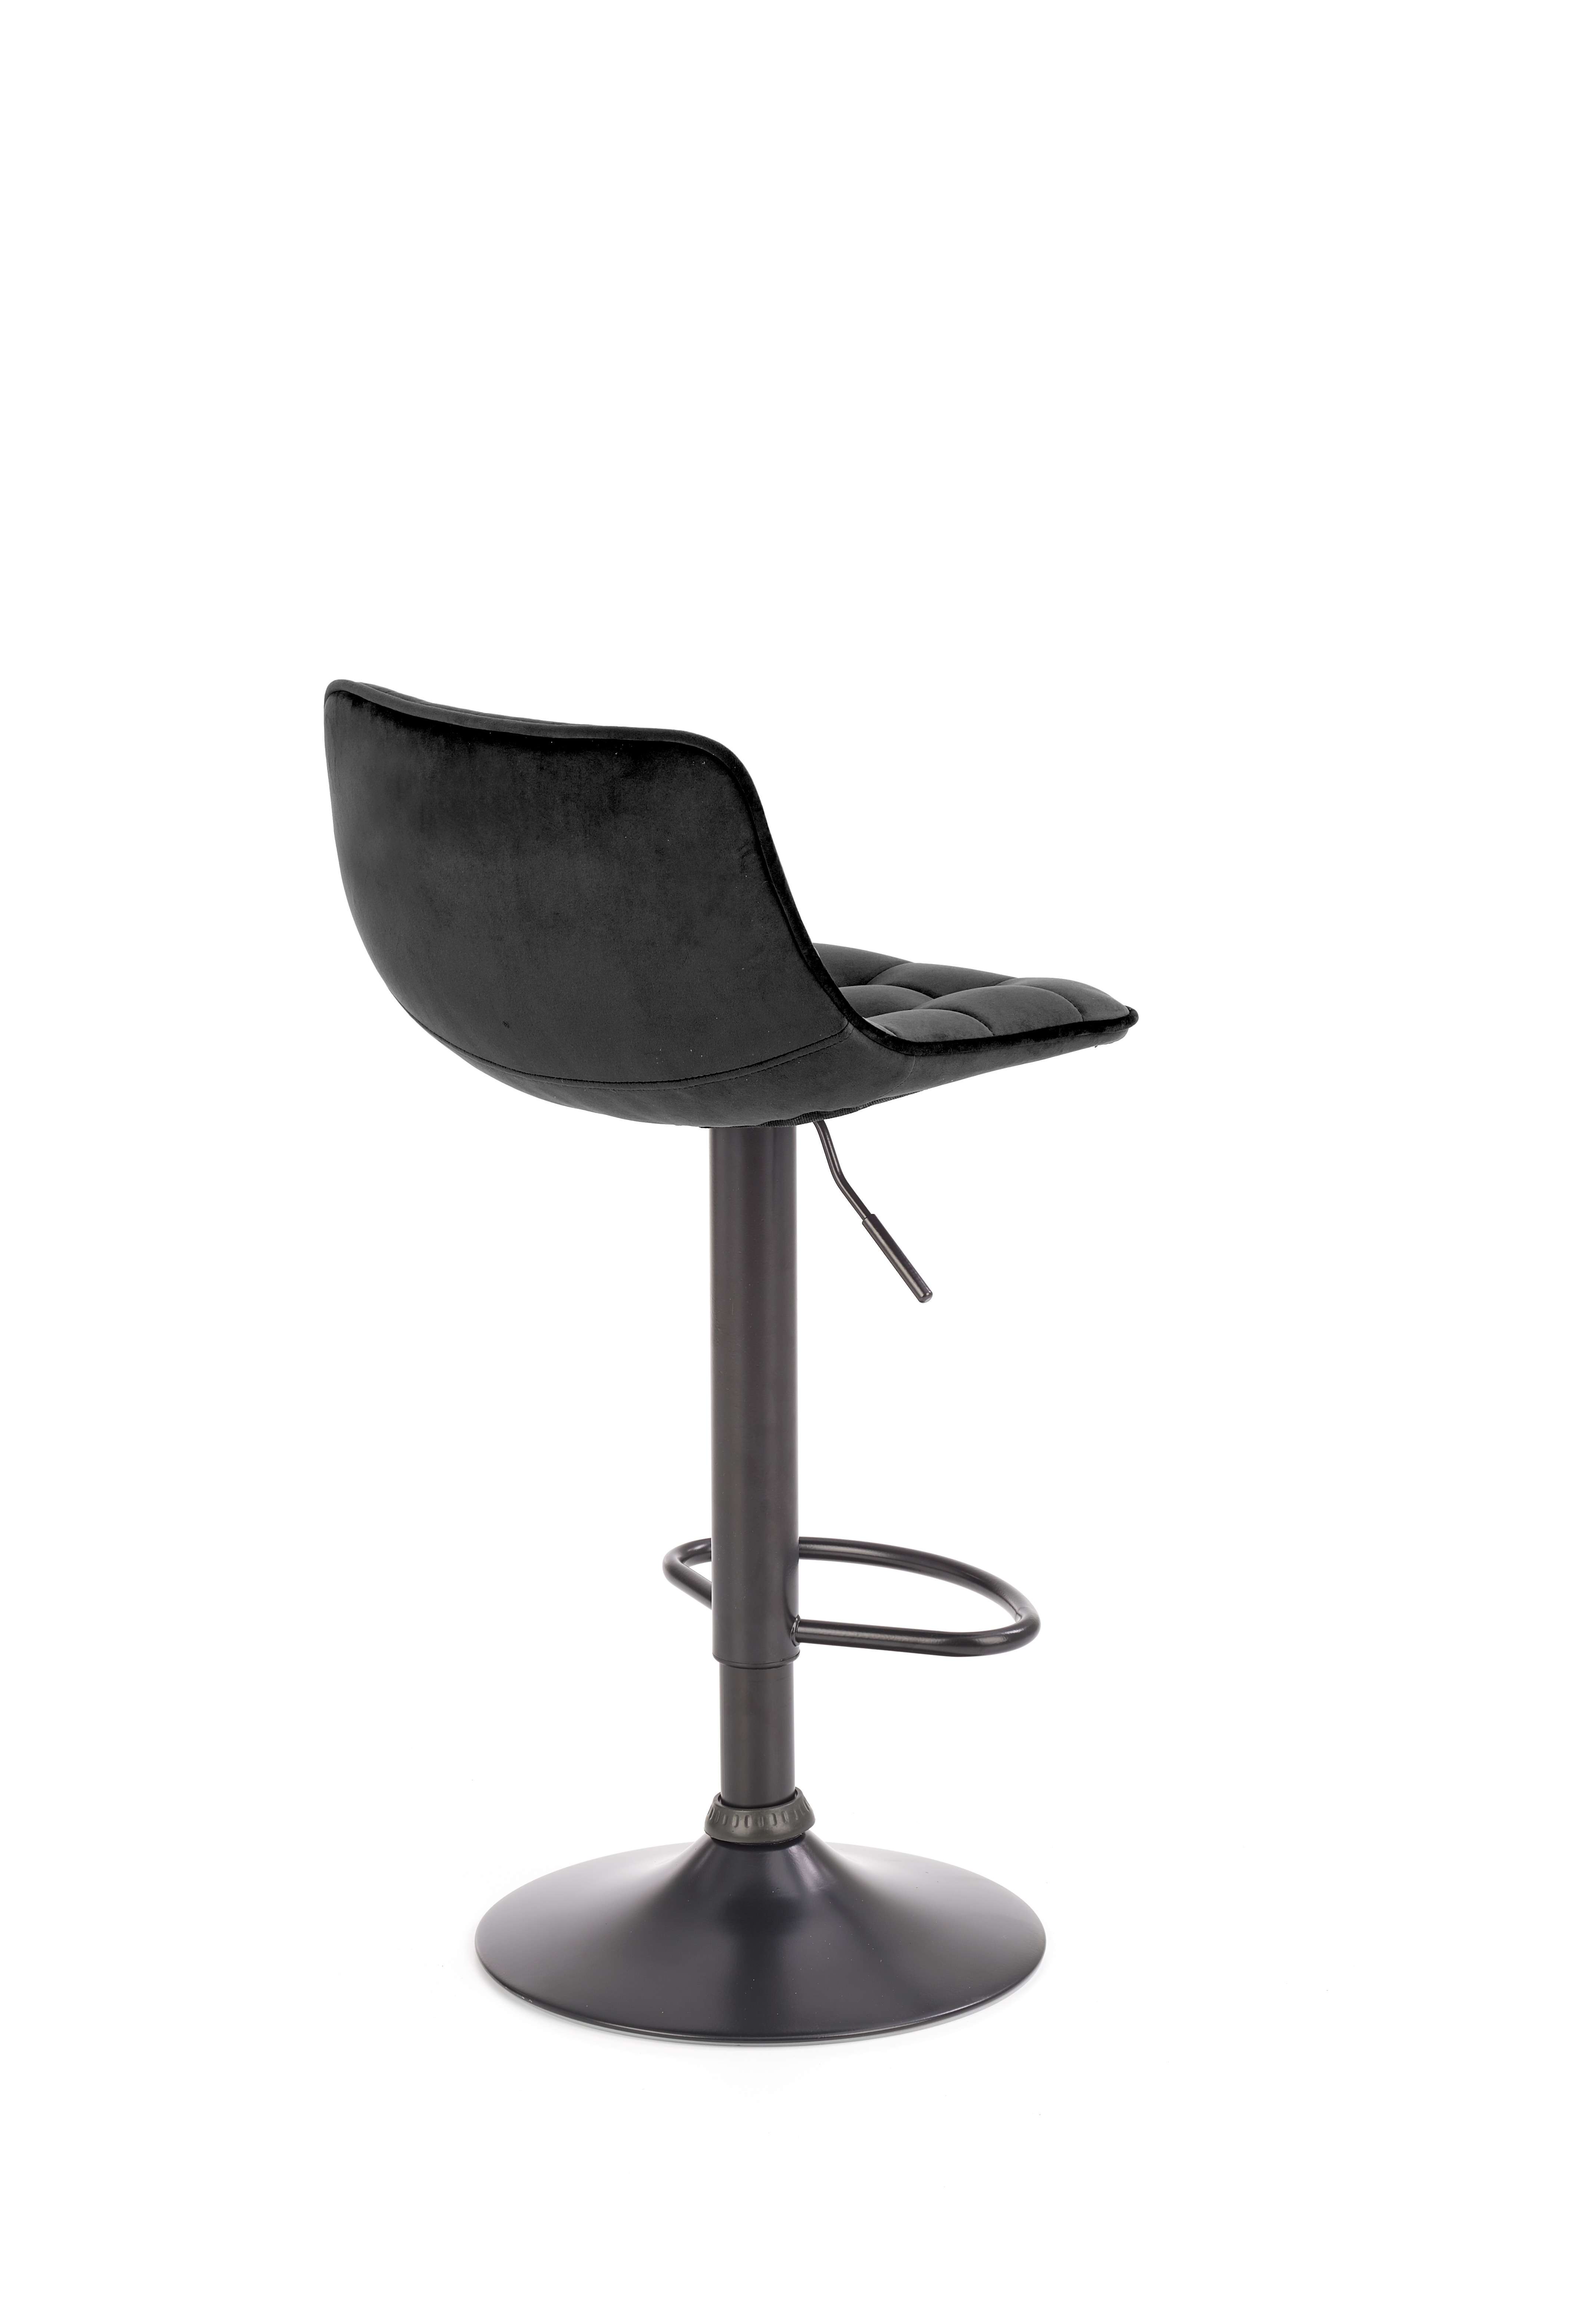 Barová stolička H95 - čierna h95 Barová stolička Čierny